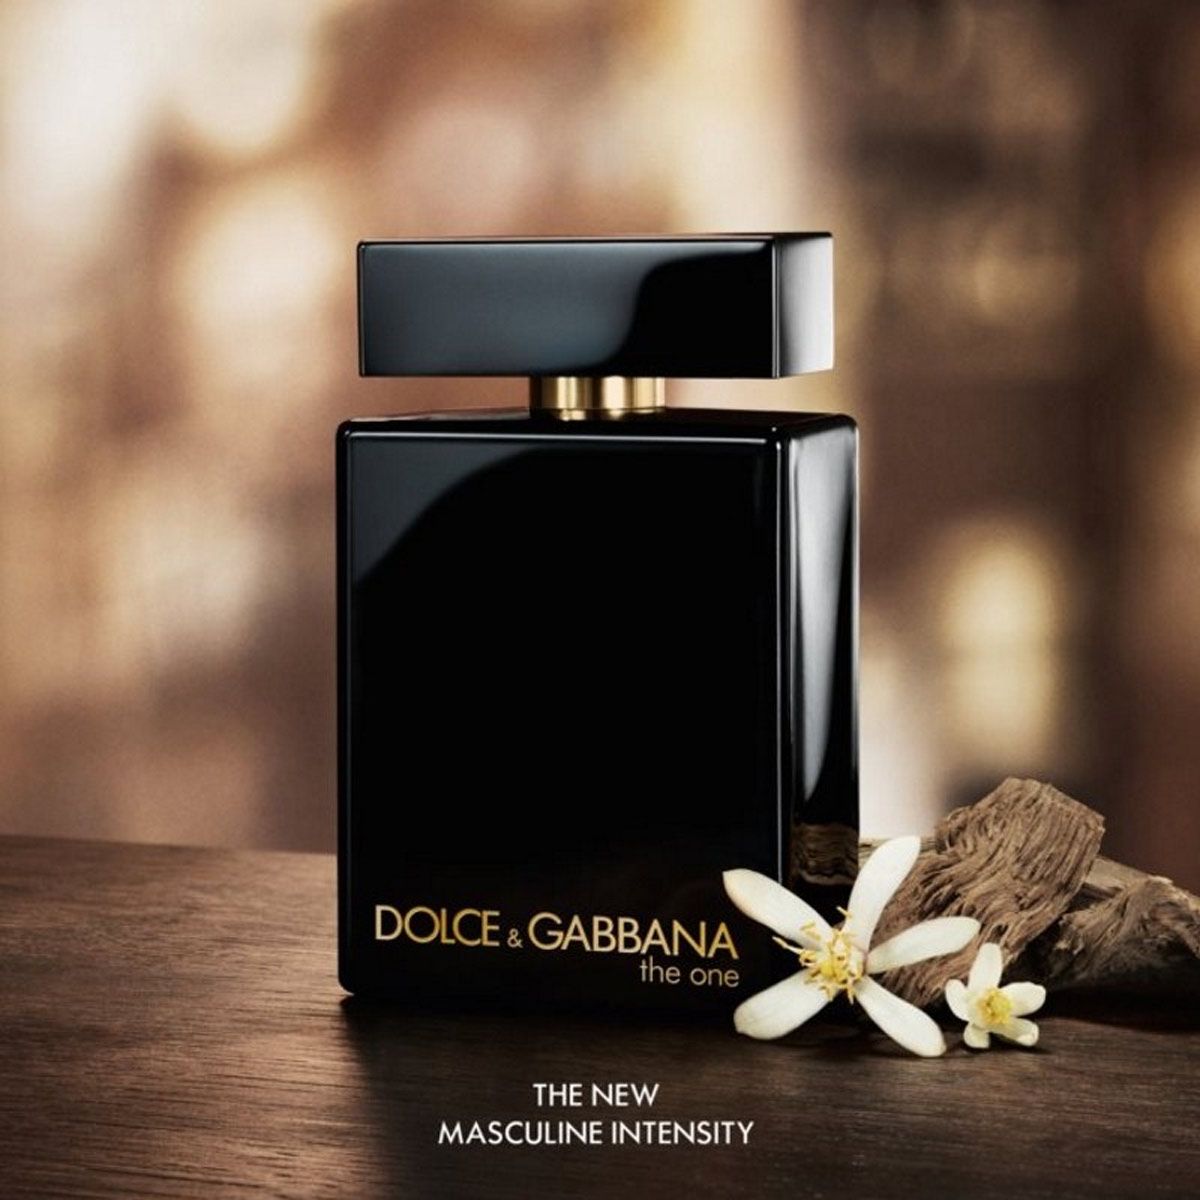  Dolce & Gabbana The One For Men Eau de Parfum Intense 